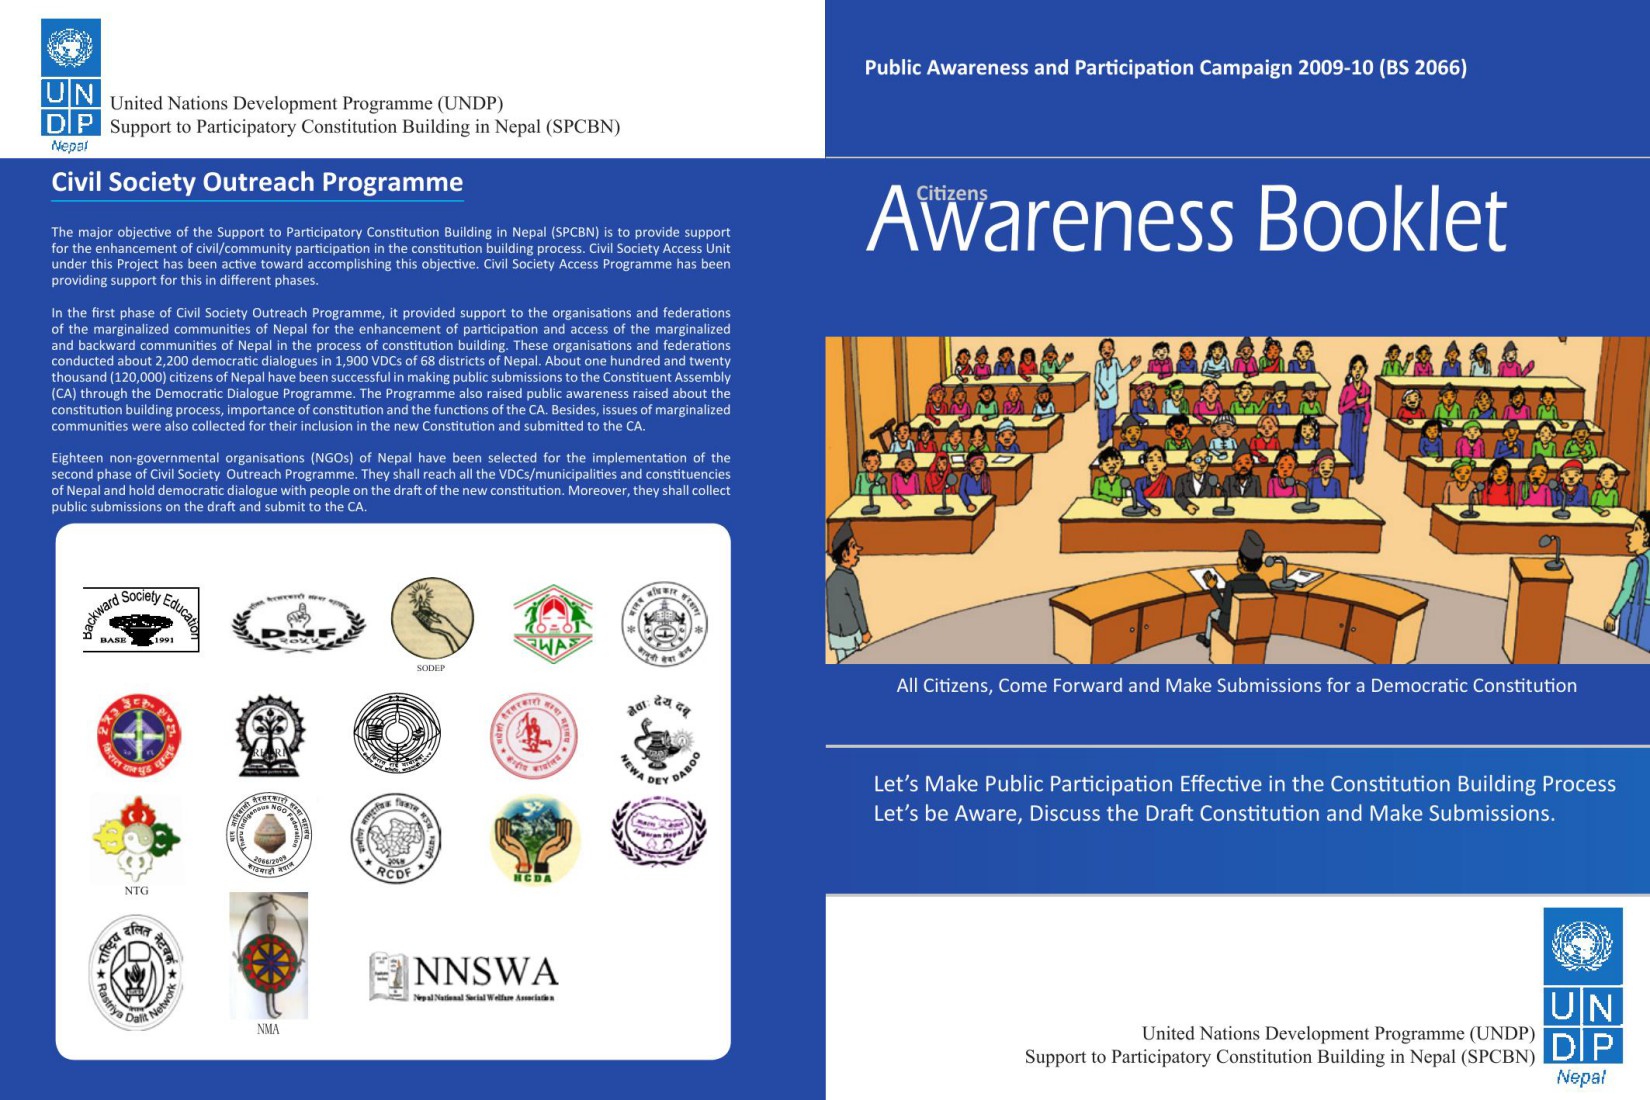 Citizens :Awareness Booklet